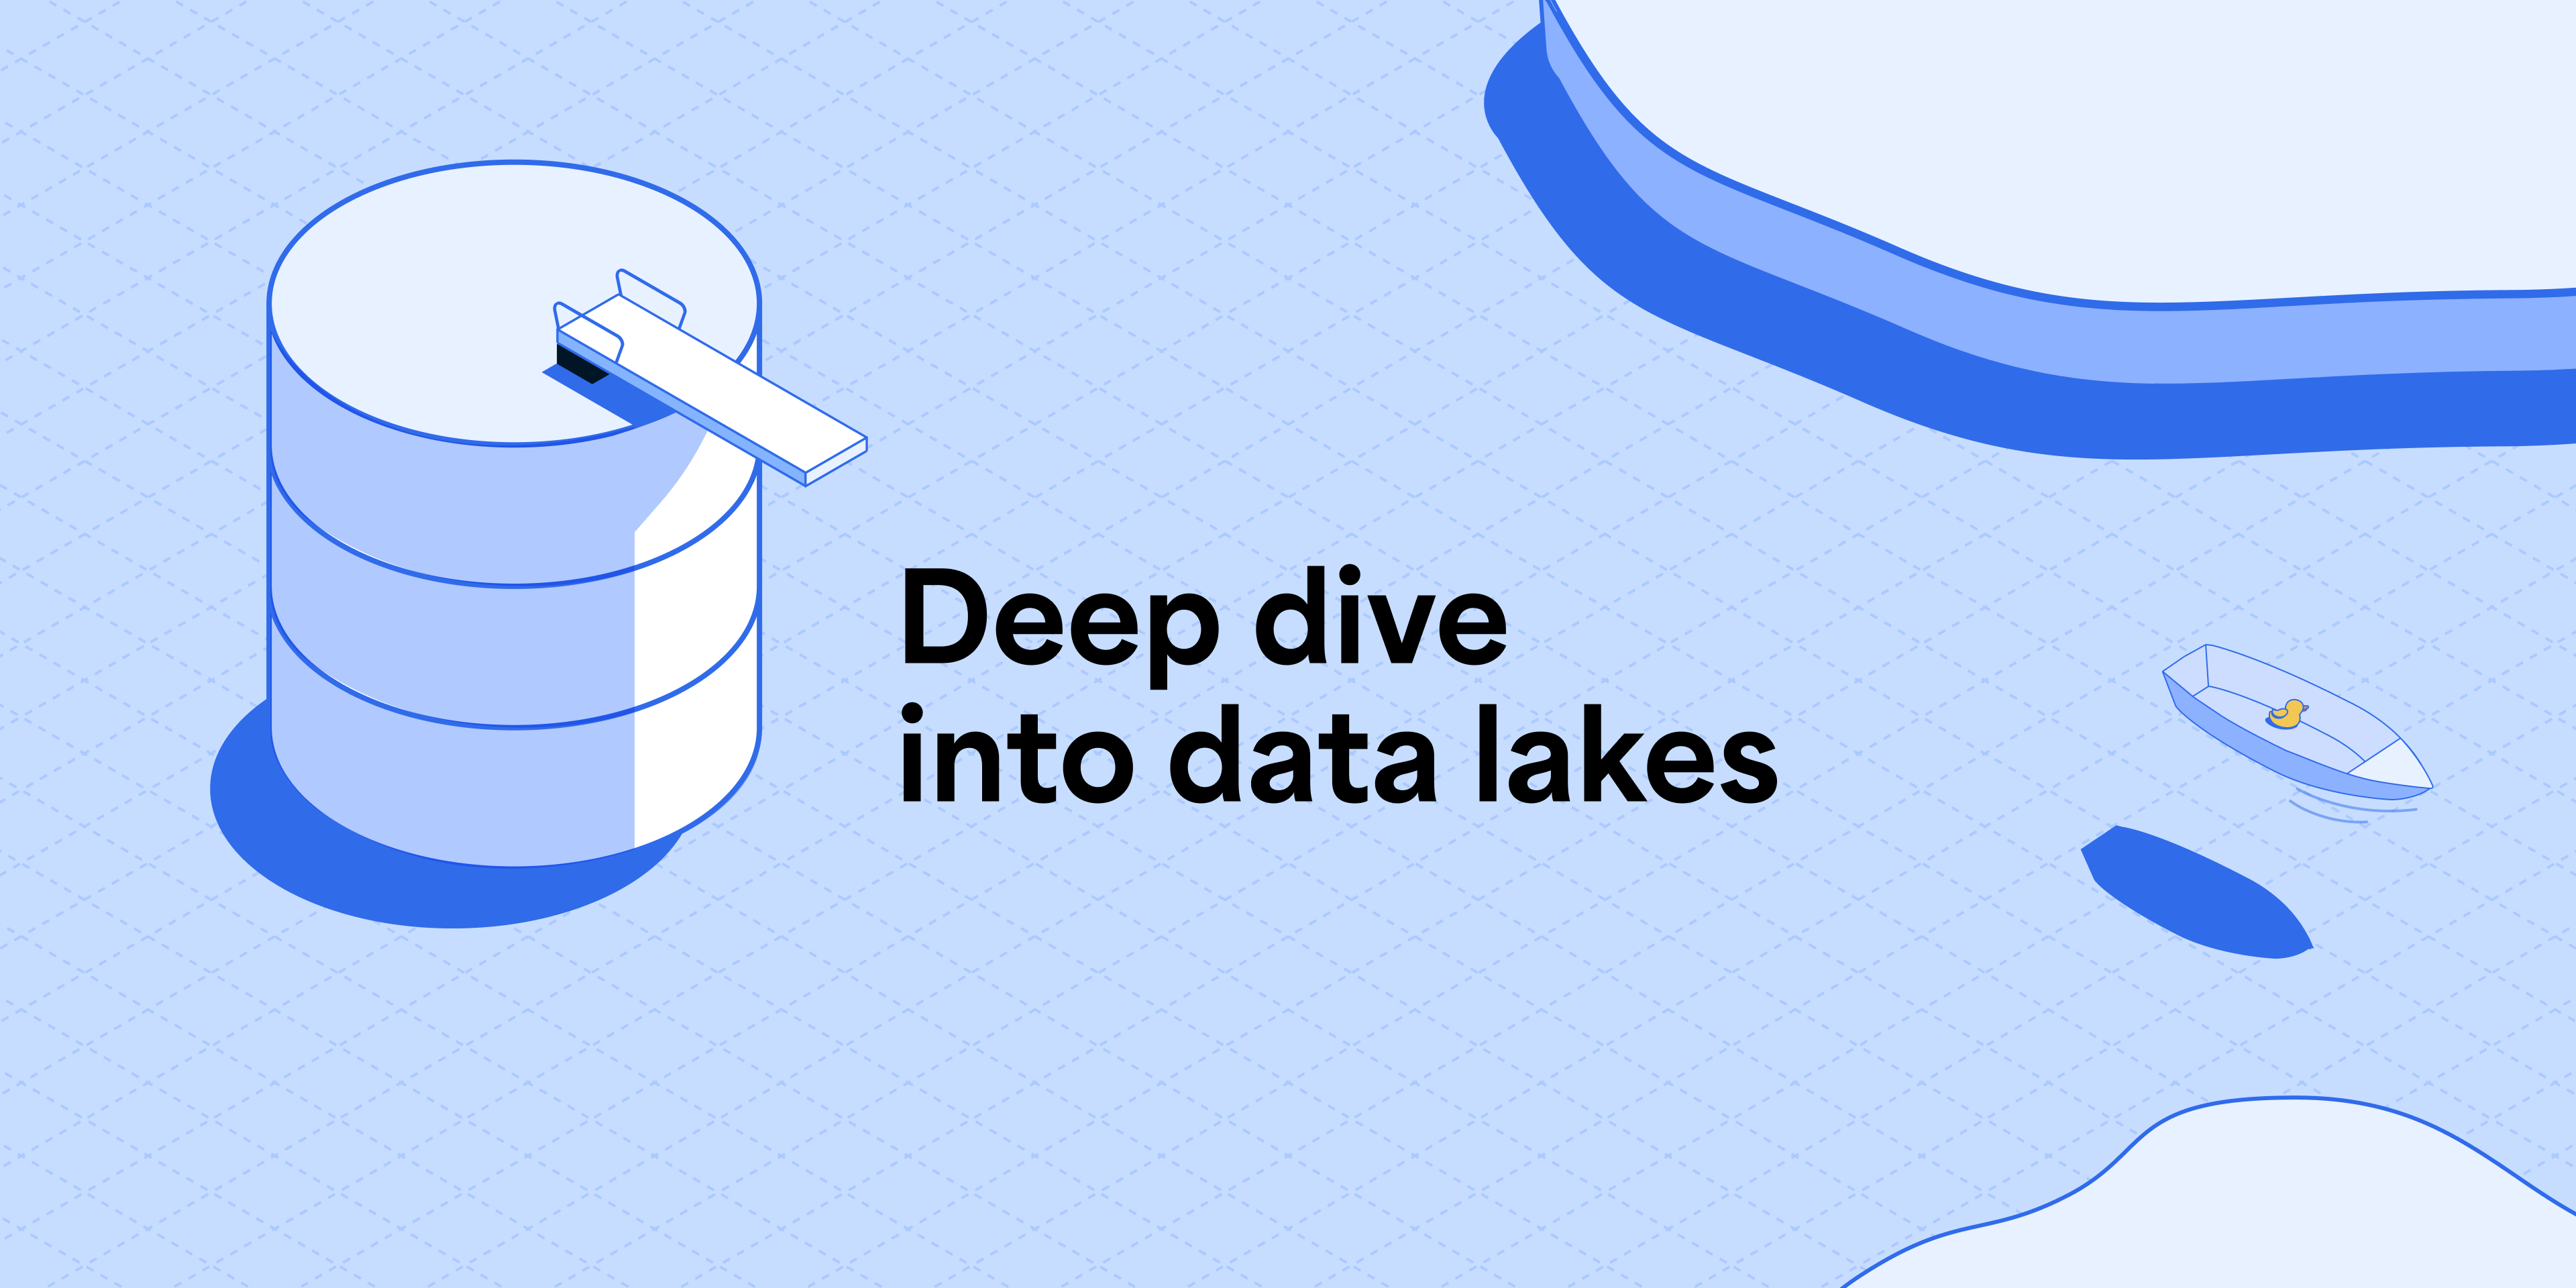 A deep dive into data lakes